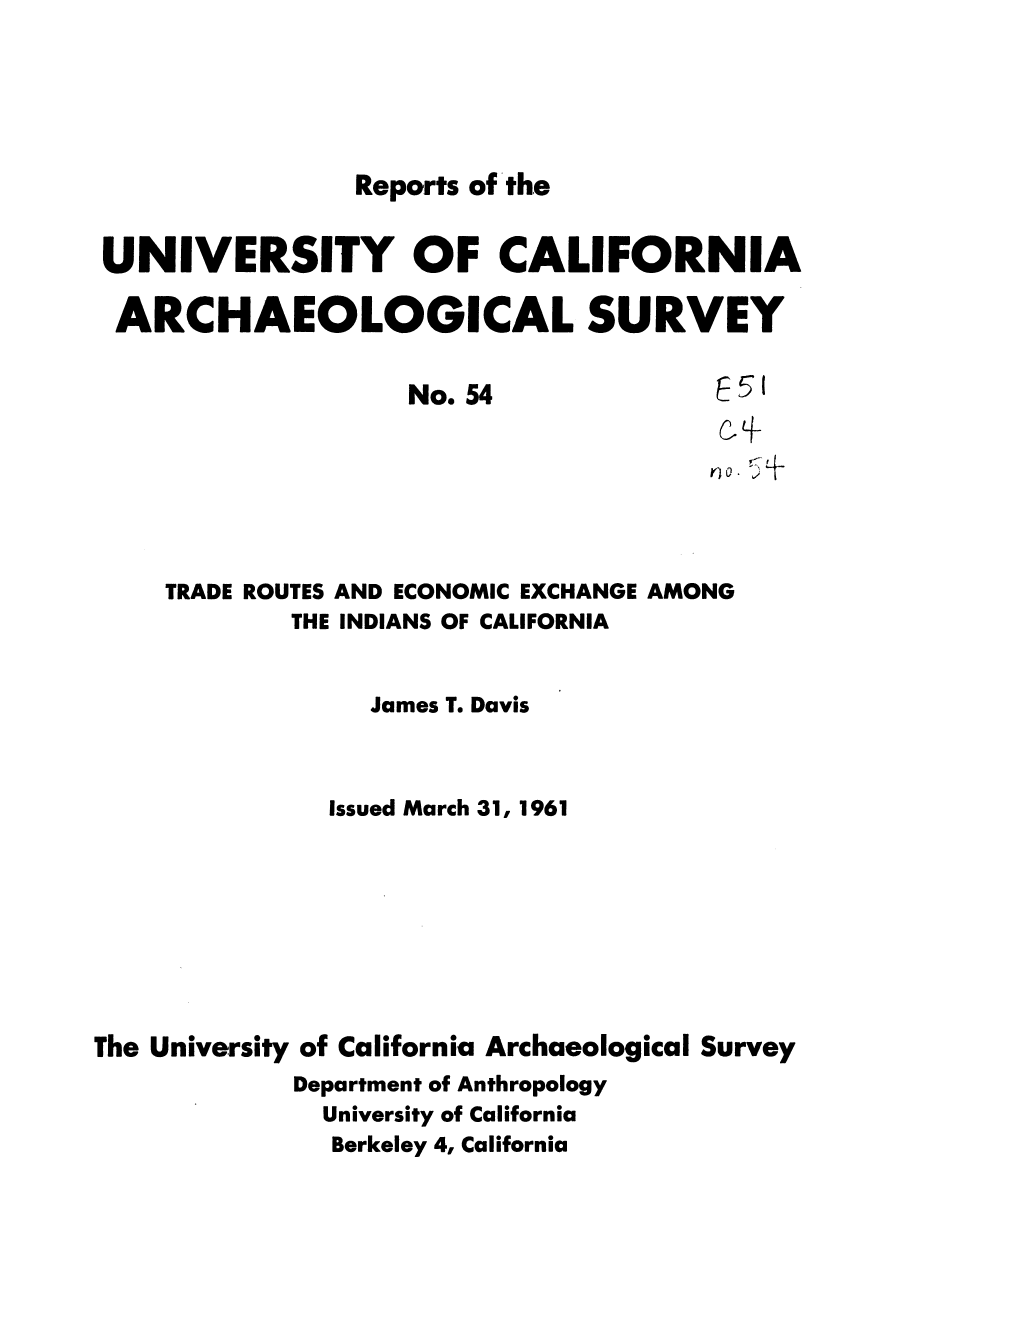 UNIVERSITY of CALIFORNIA ARCHAEOLOGICAL SURVEY No